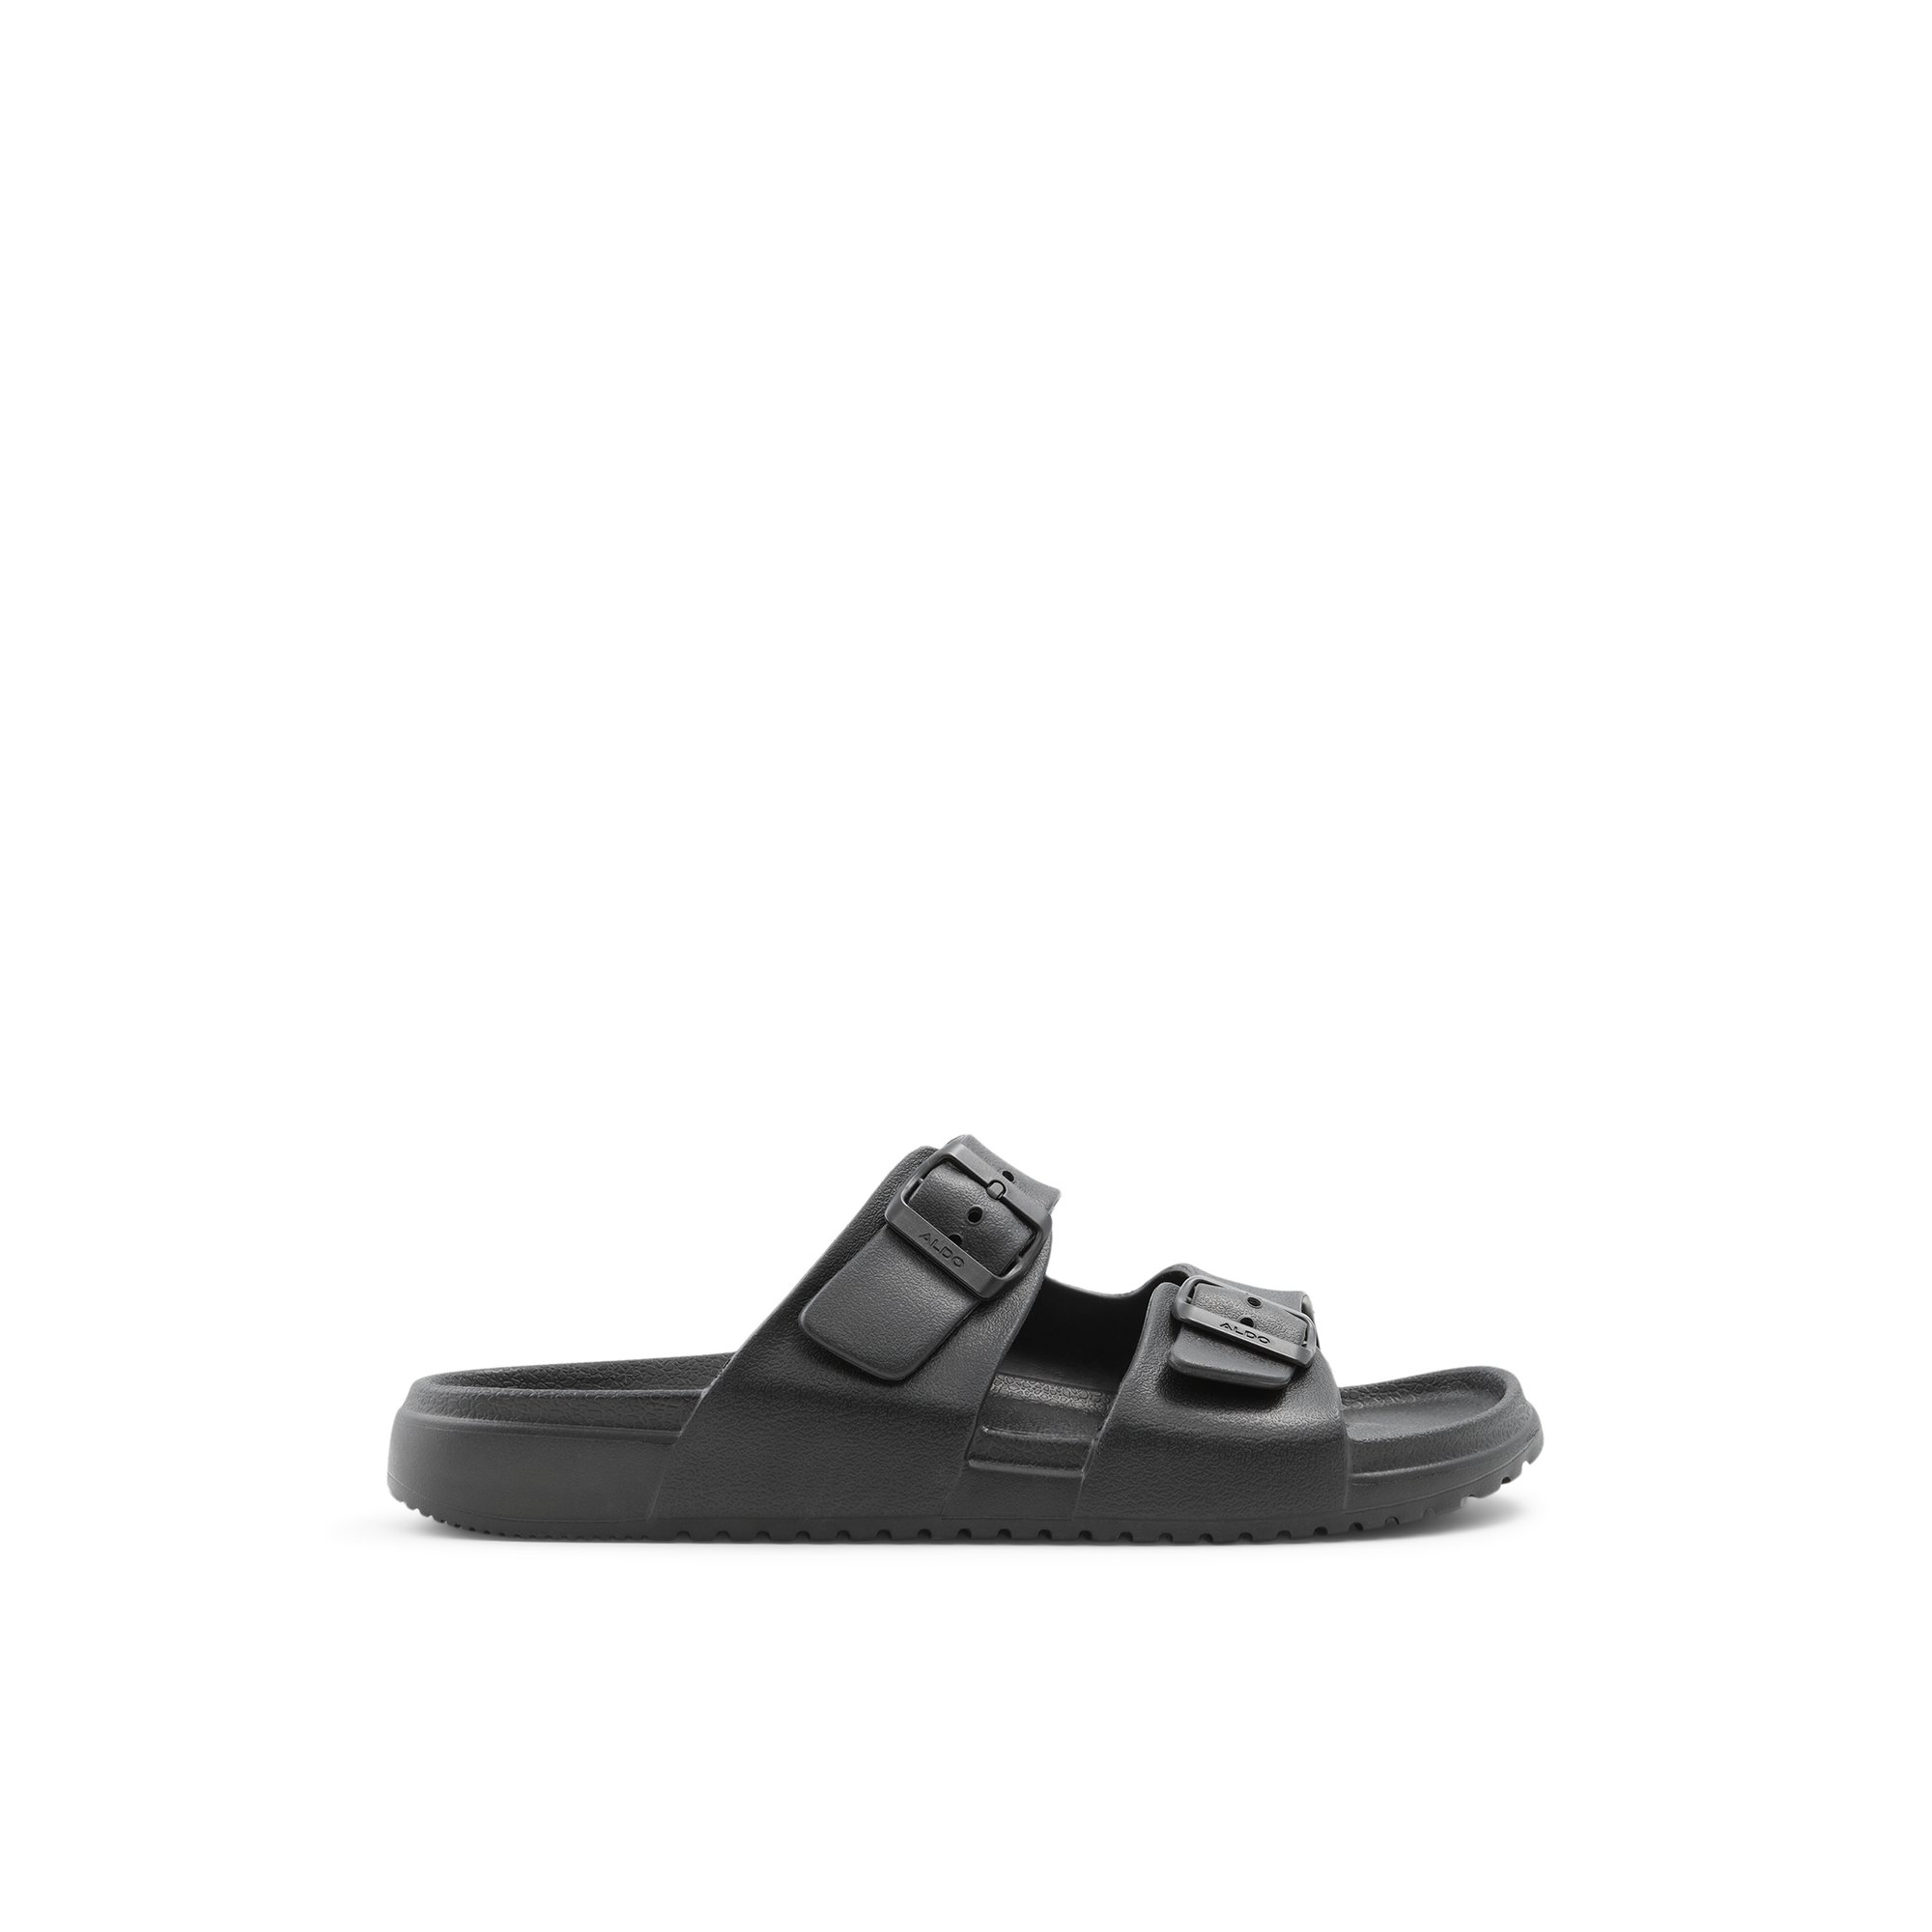 ALDO Hideo - Men's Slide Sandals - Black